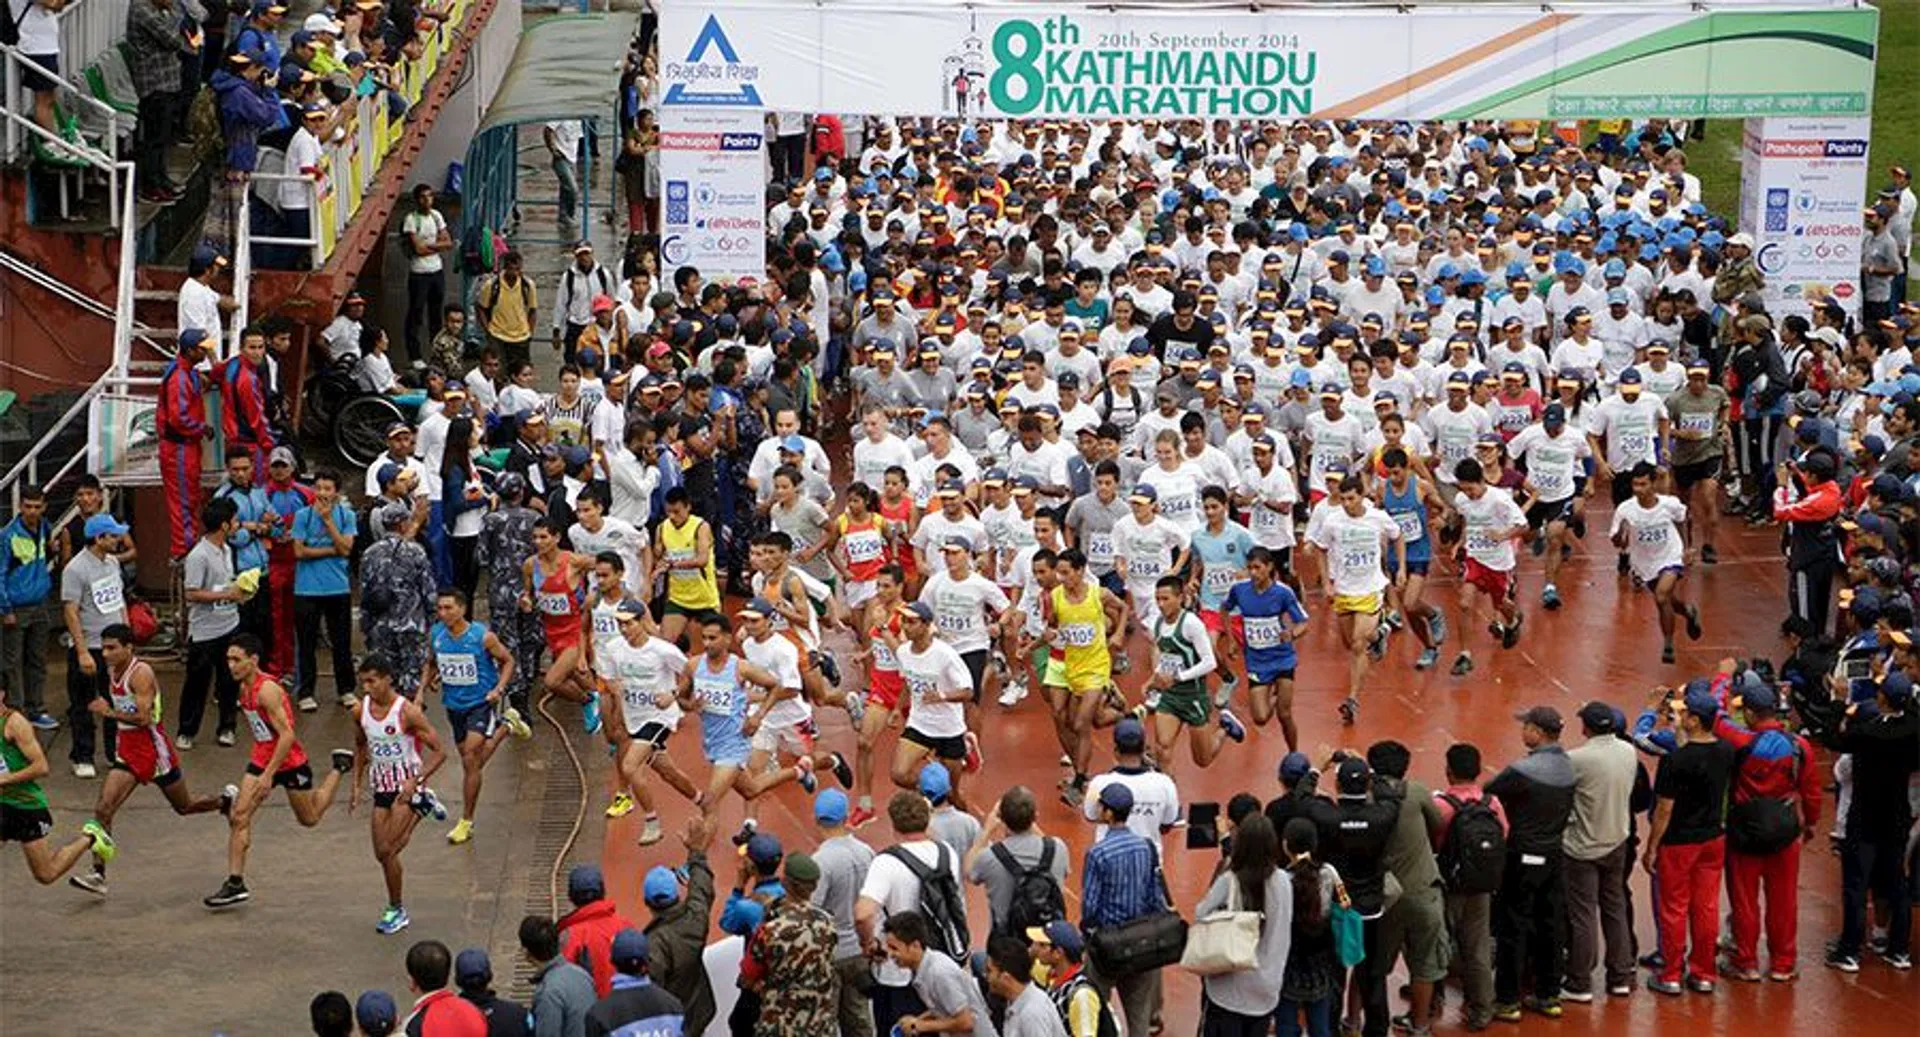 Kathmandu Marathon